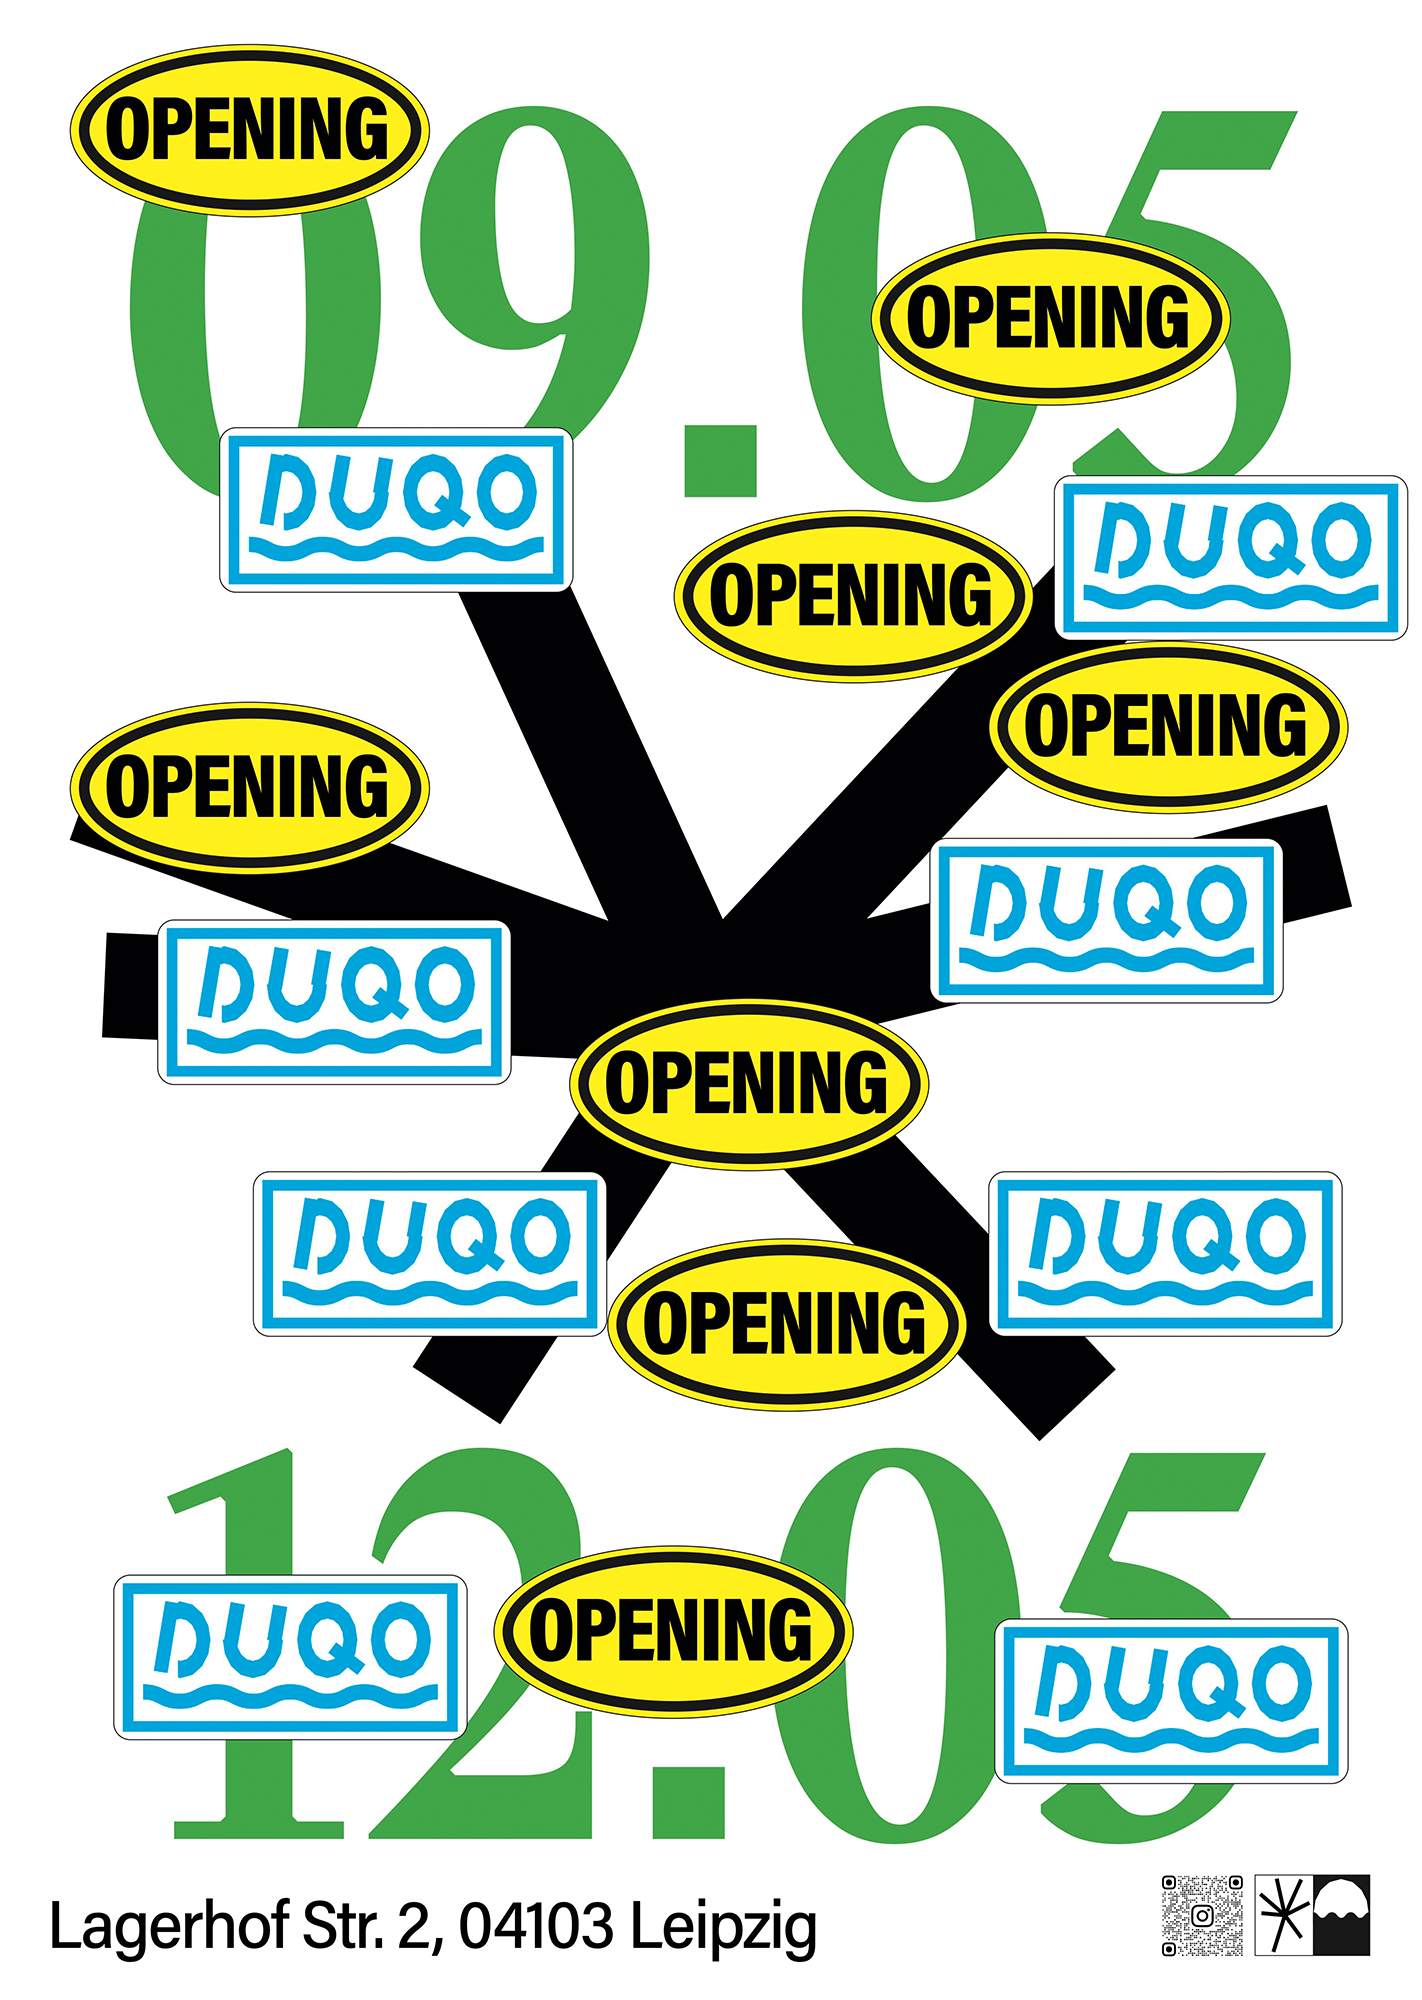 DUQO OPENING - フライヤー表